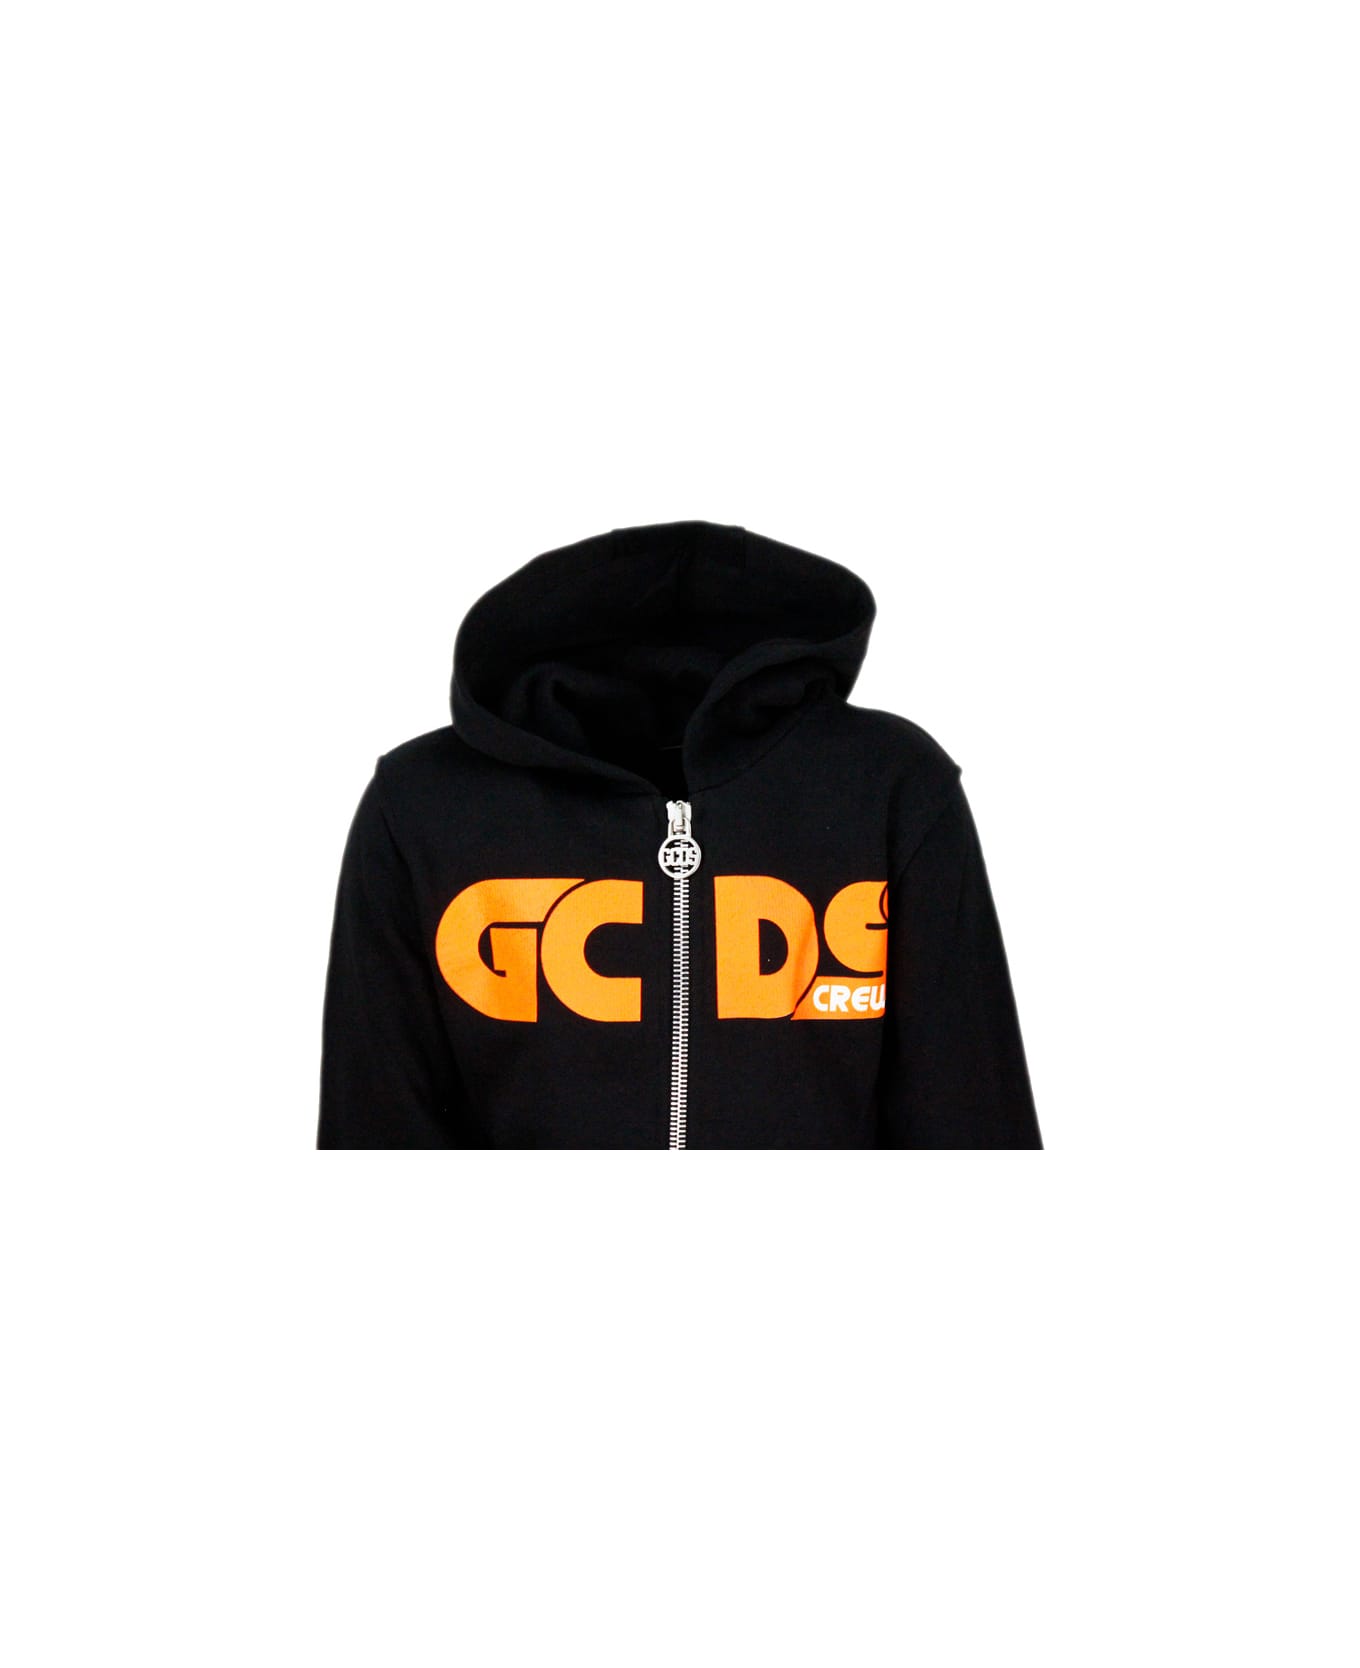 GCDS Hooded Sweatshirt With Zip And Fluo Writing - Black